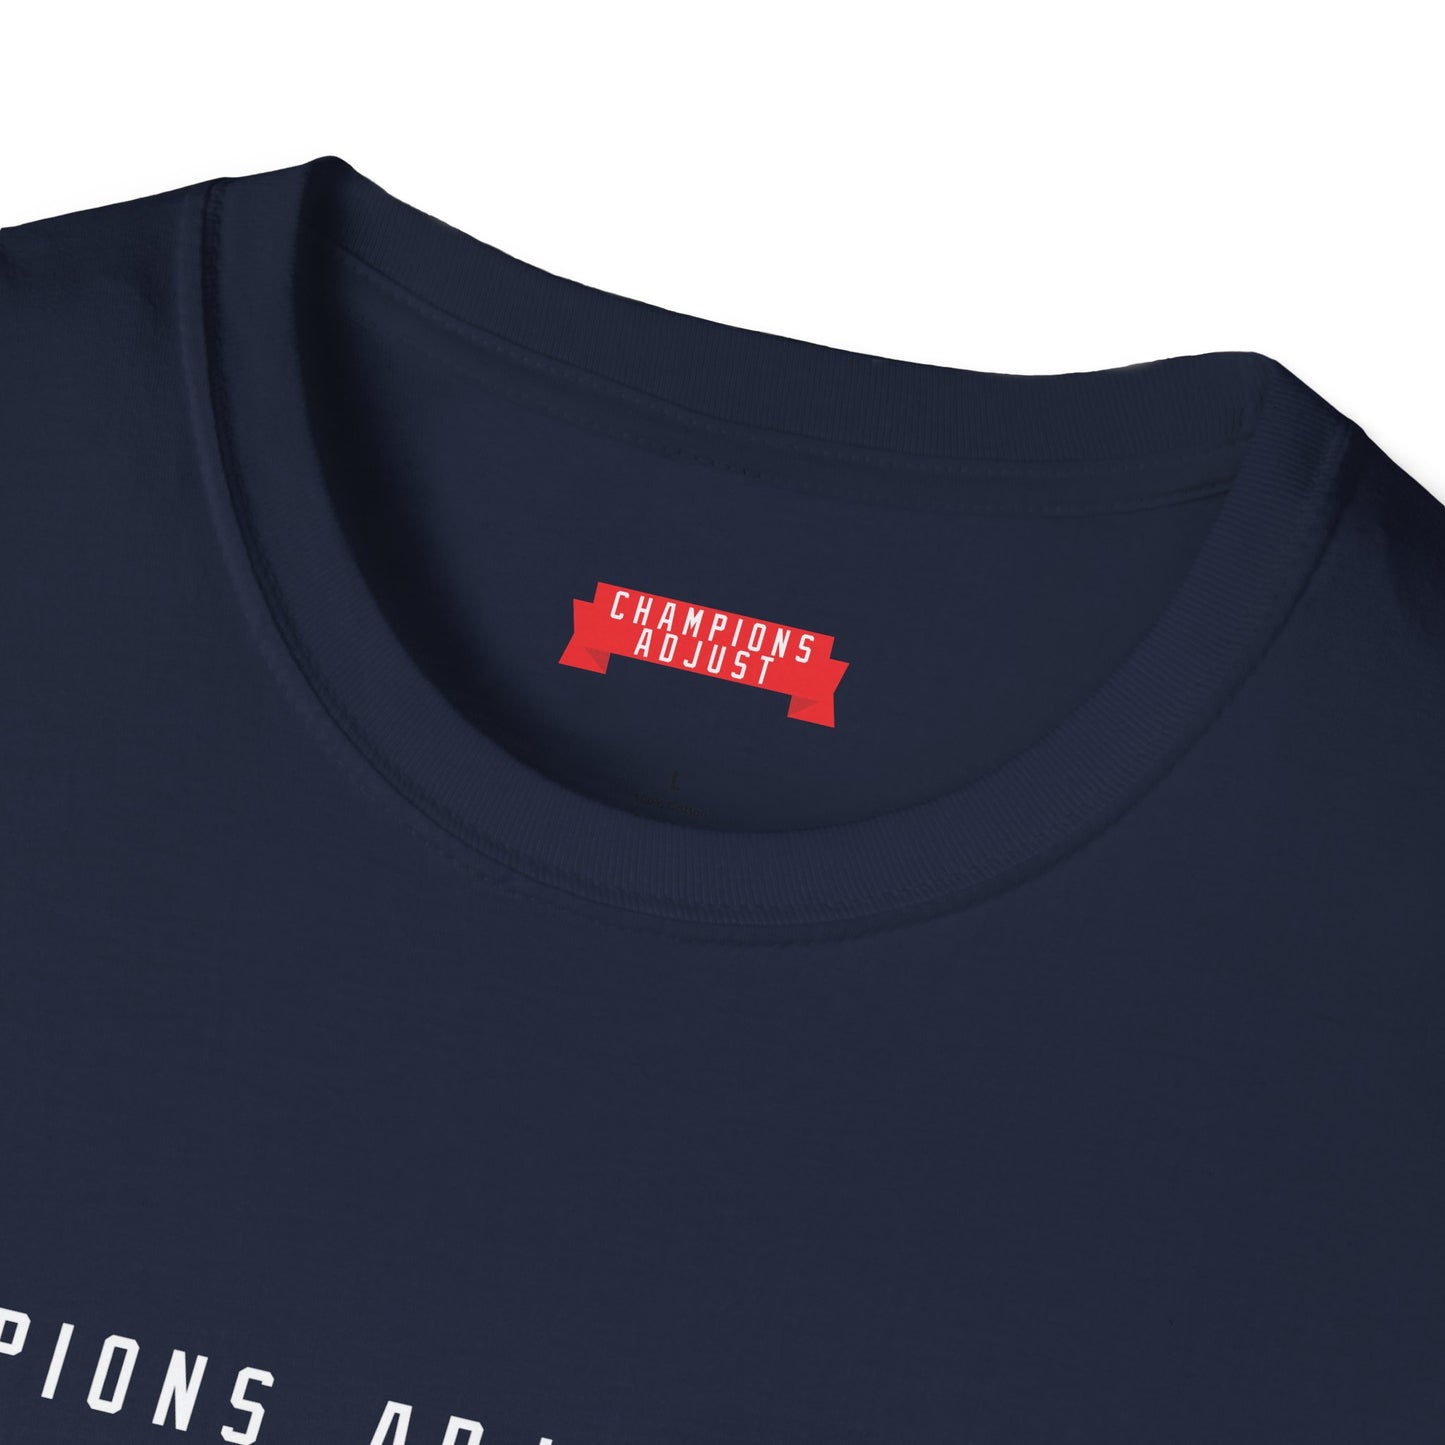 Champions Adjust Mindset T-Shirt (Navy)